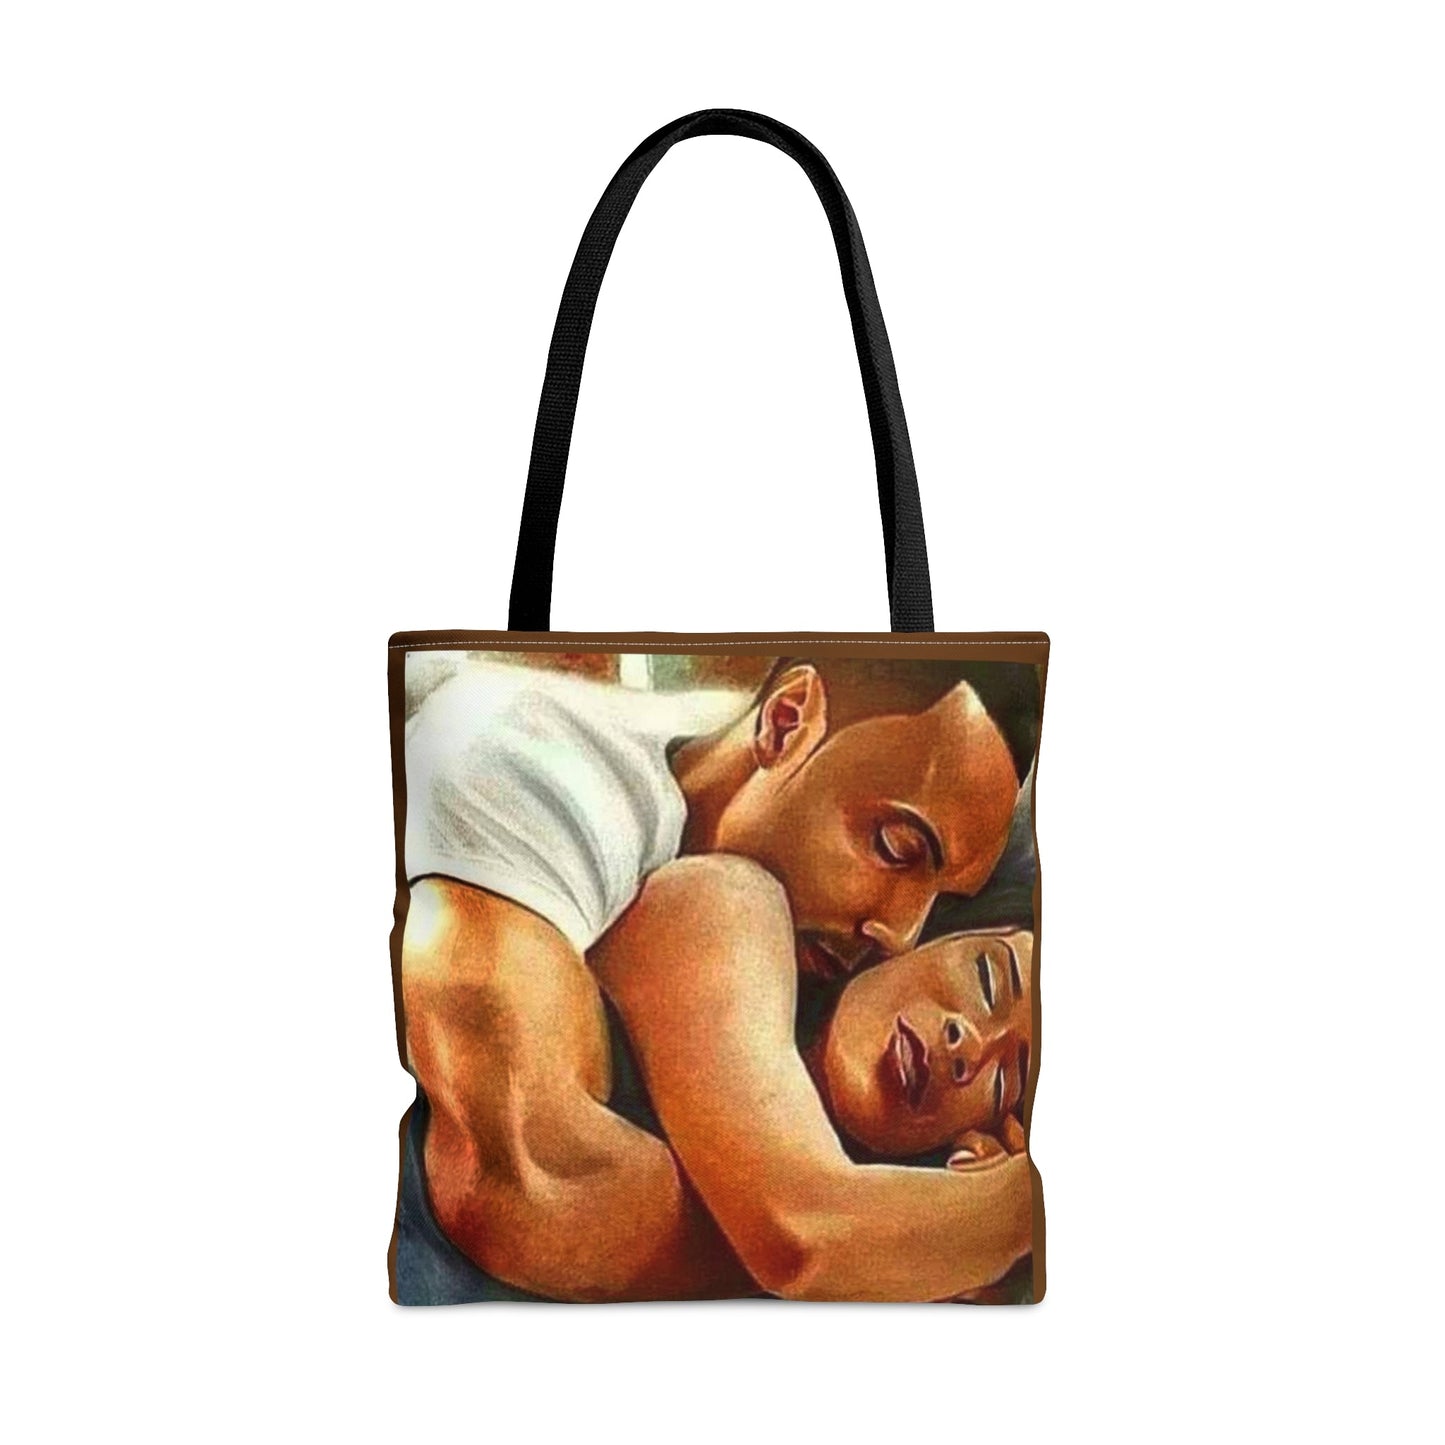 Sleeping Man and Woman Tote Bag